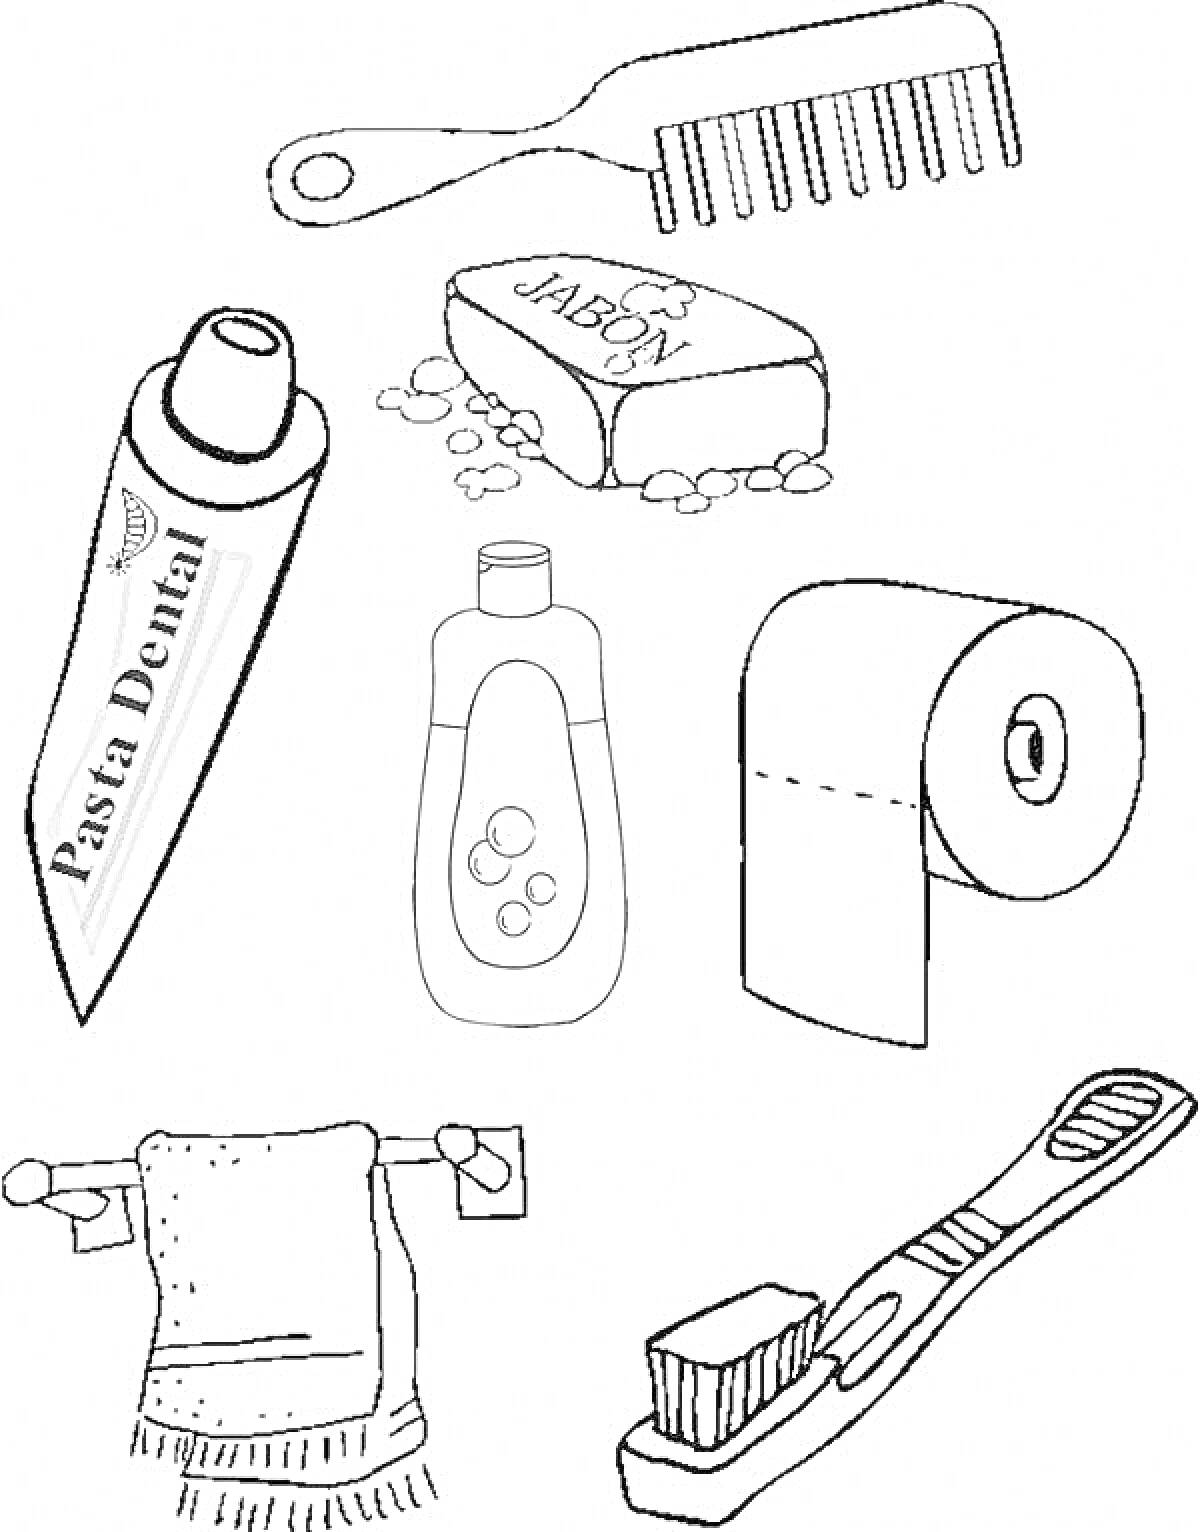 Зубная паста, мыло, шампунь, туалетная бумага, полотенце, расческа, зубная щетка